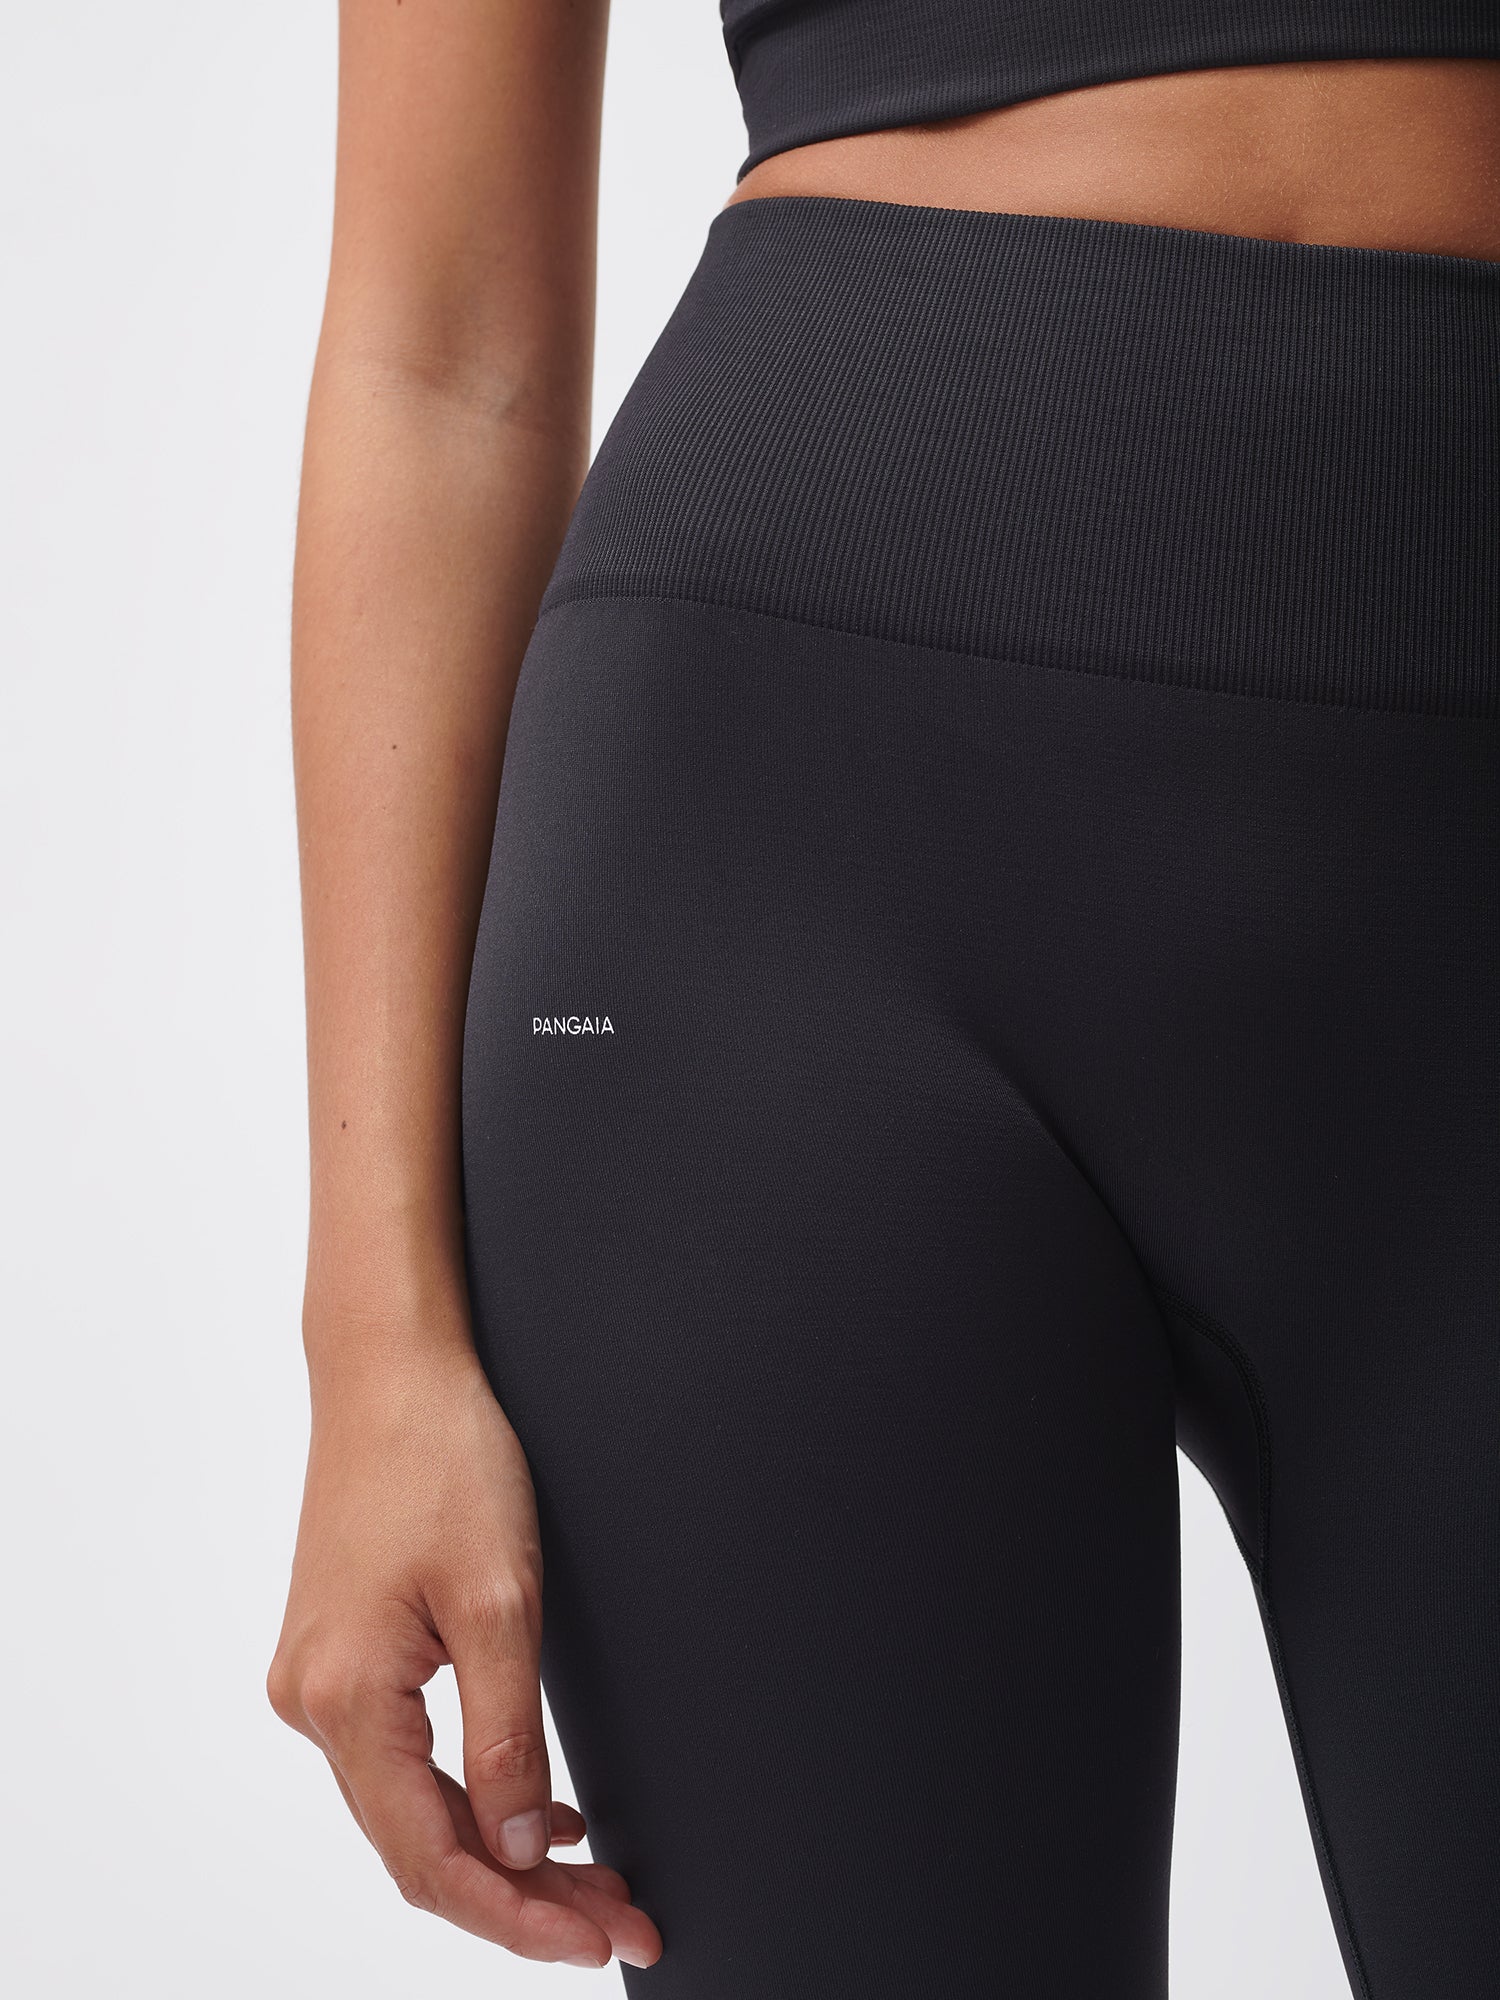 Nike Dri-Fit Yoga Pants Womens XS Black Stretch Straight Leg Athleisure EUC